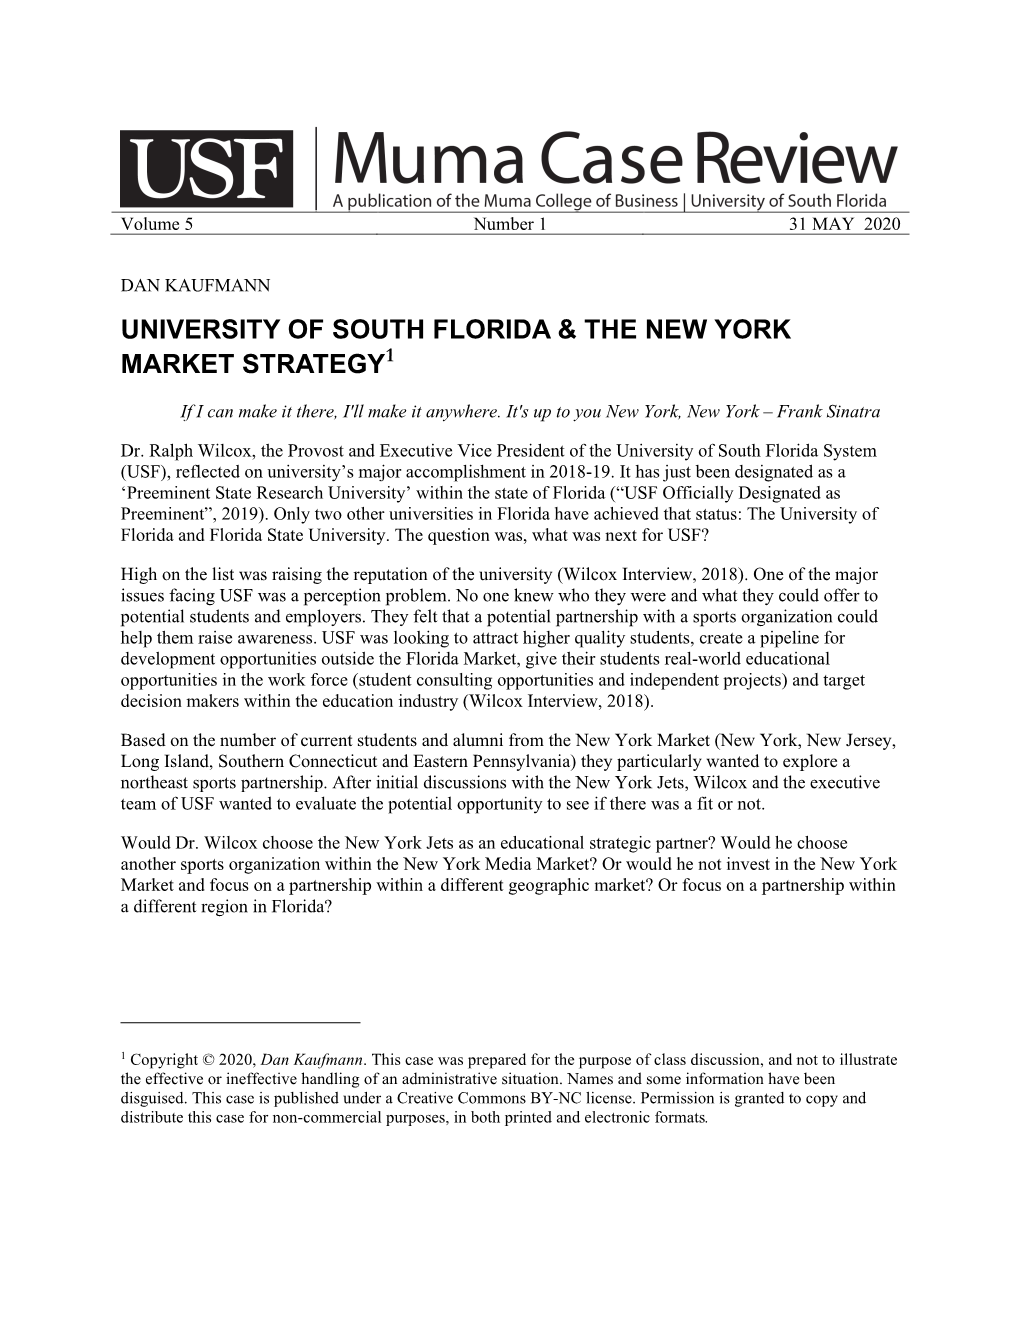 University of South Florida & New York Market Strategy